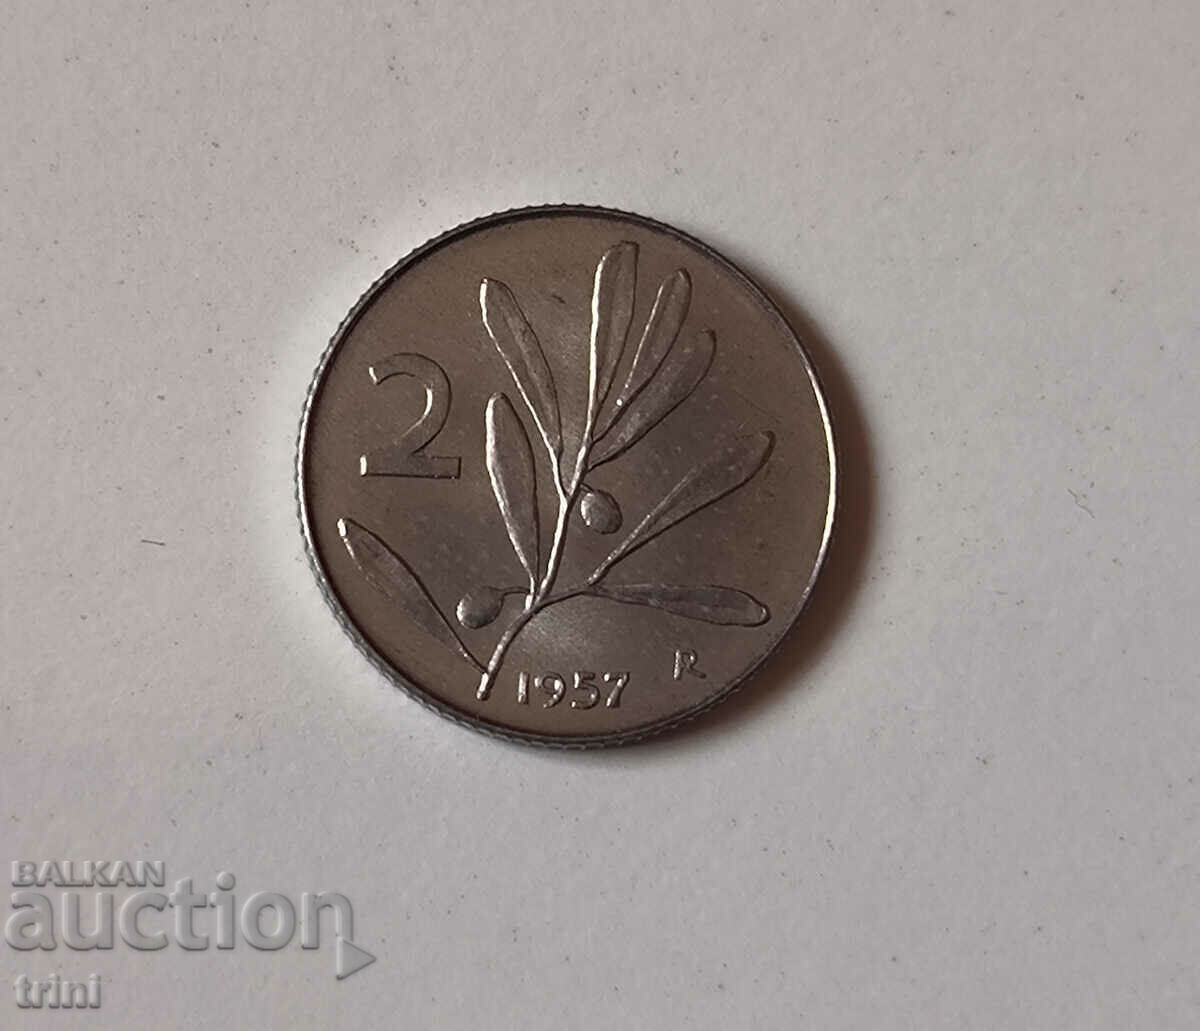 Italy 2 lire 1957 year g105